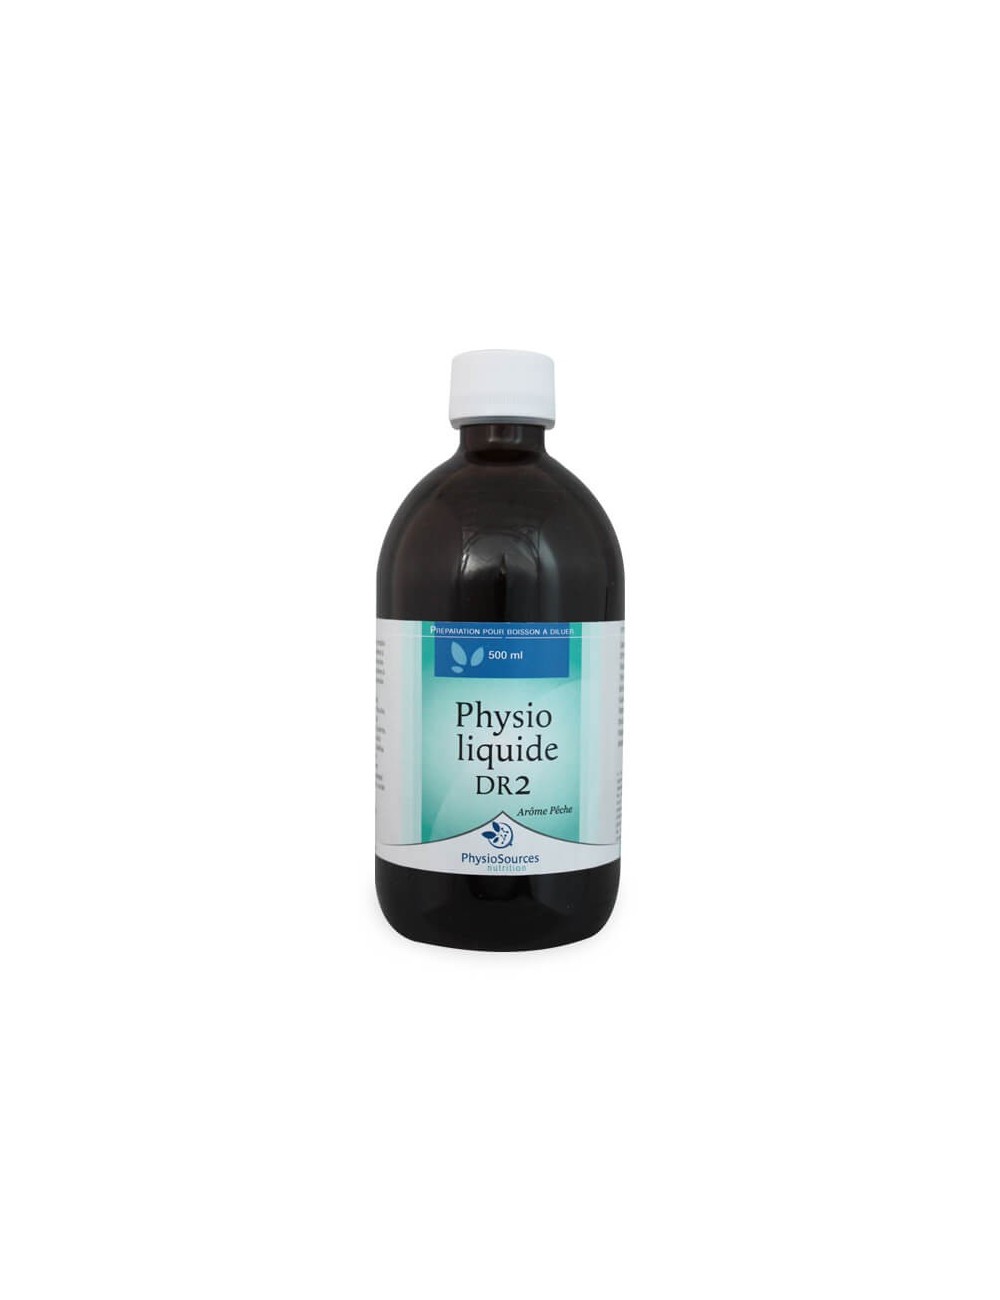 Physio liquide DR 2 Complément Alimentaire Physio Sources 